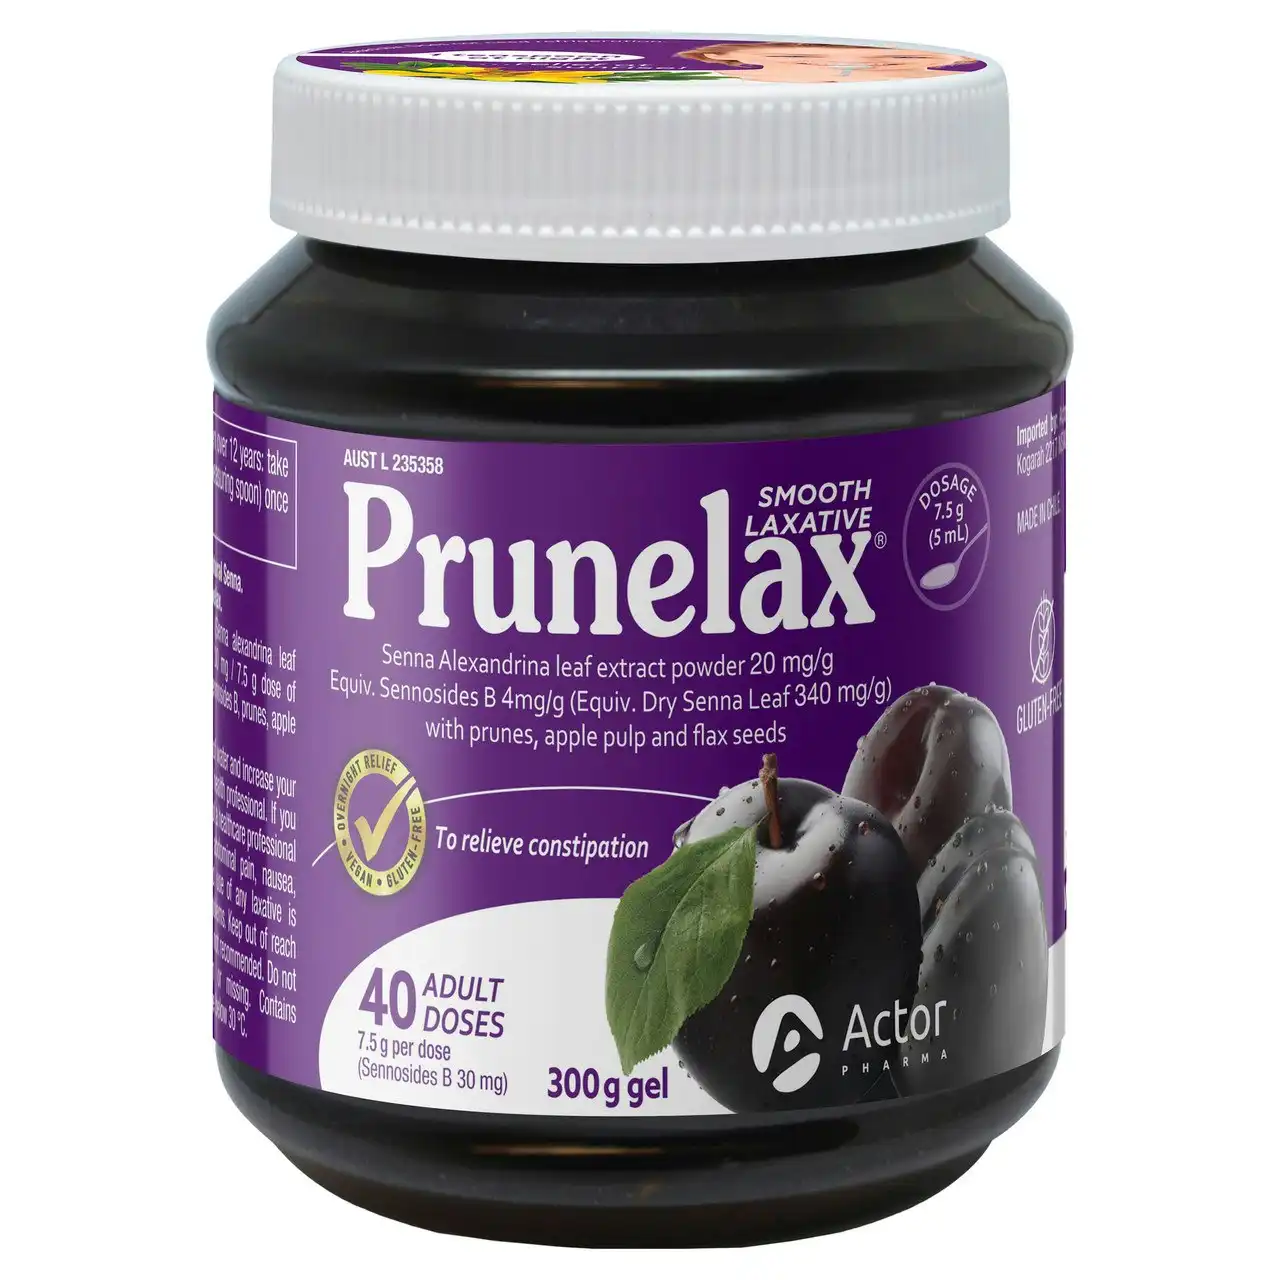 Prunelax Smooth Laxative 300g Gel